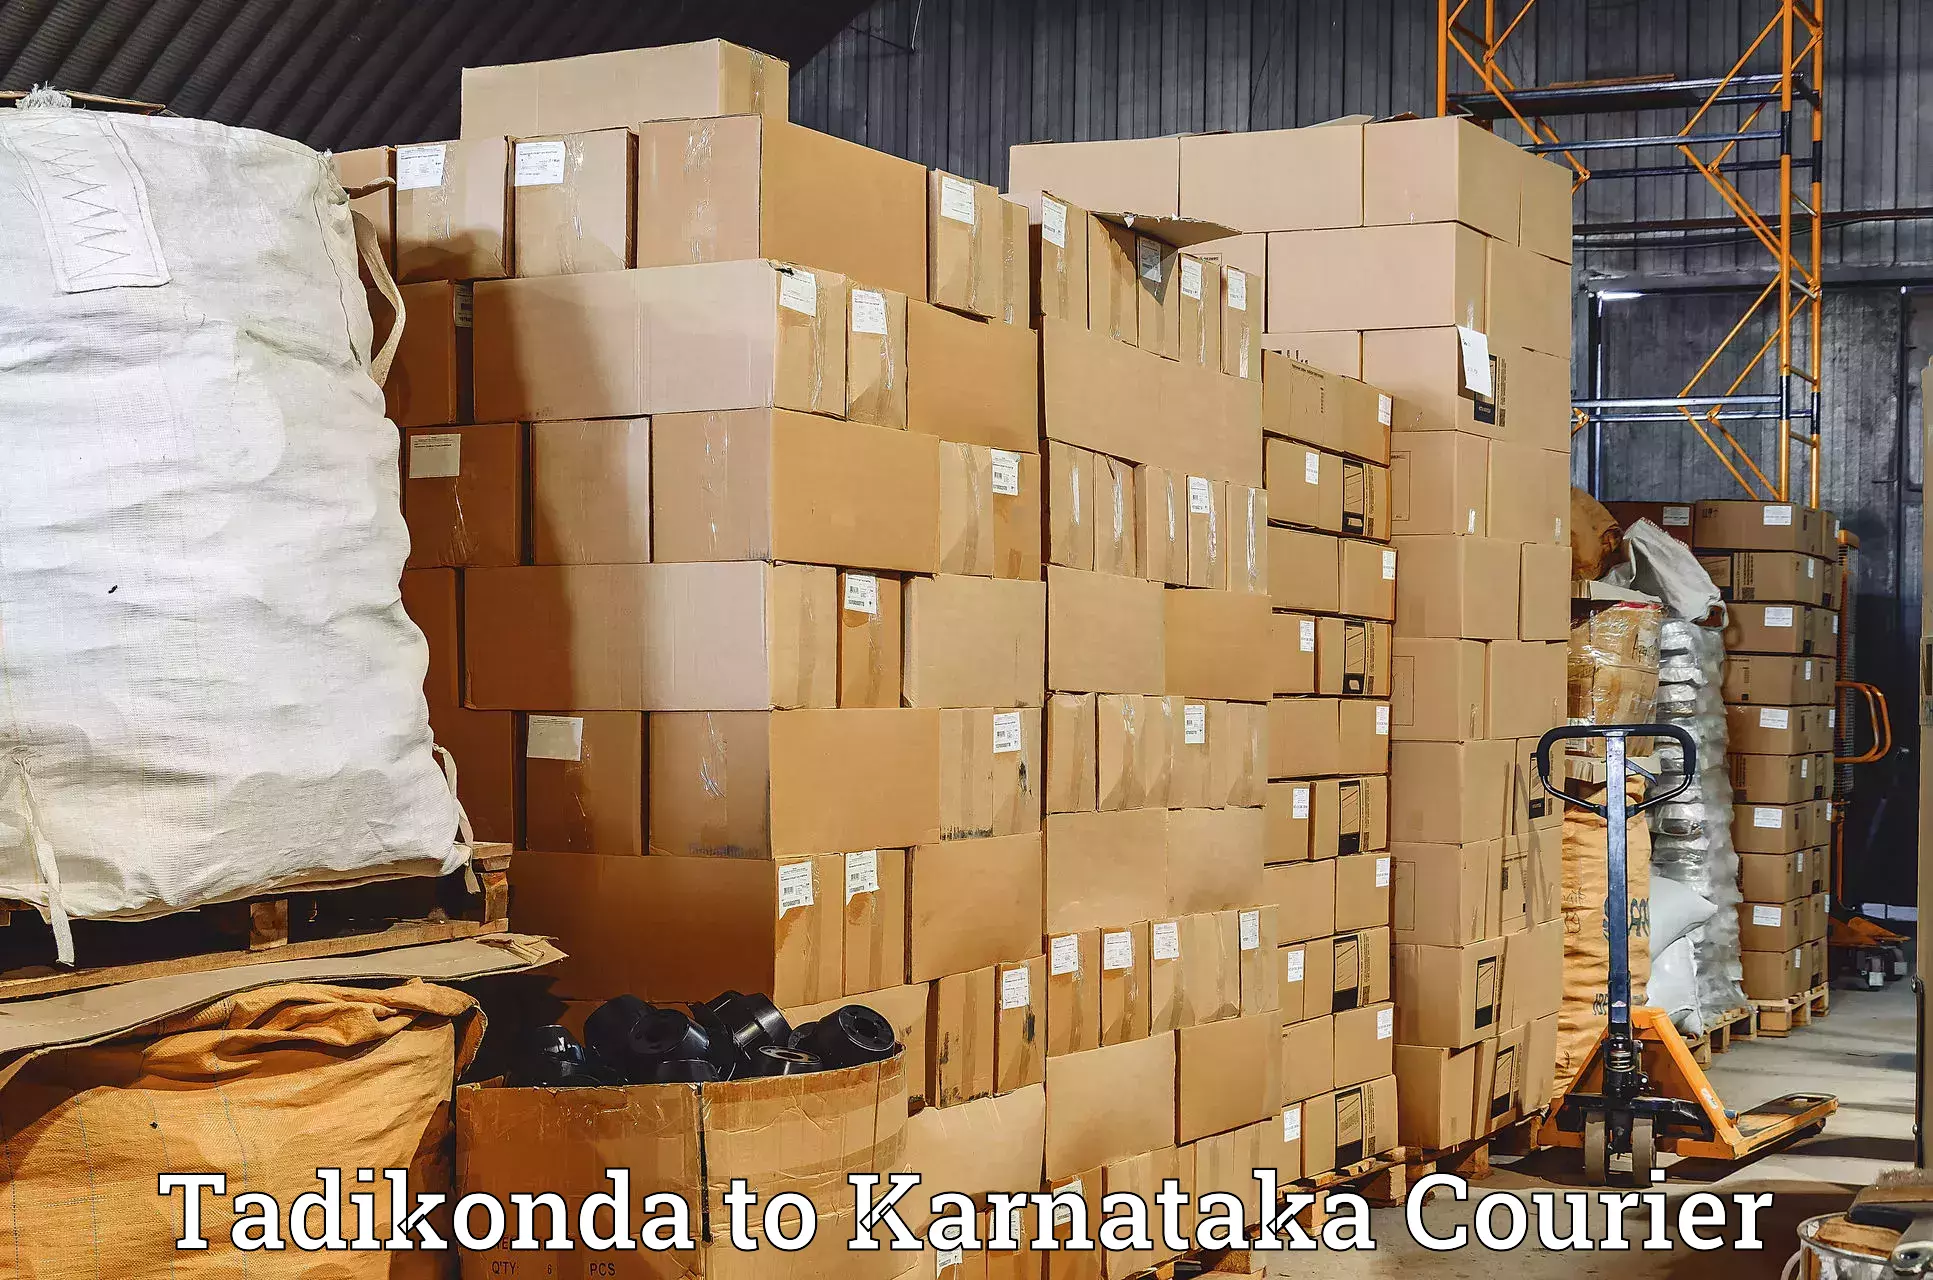 Subscription-based courier Tadikonda to Karnataka